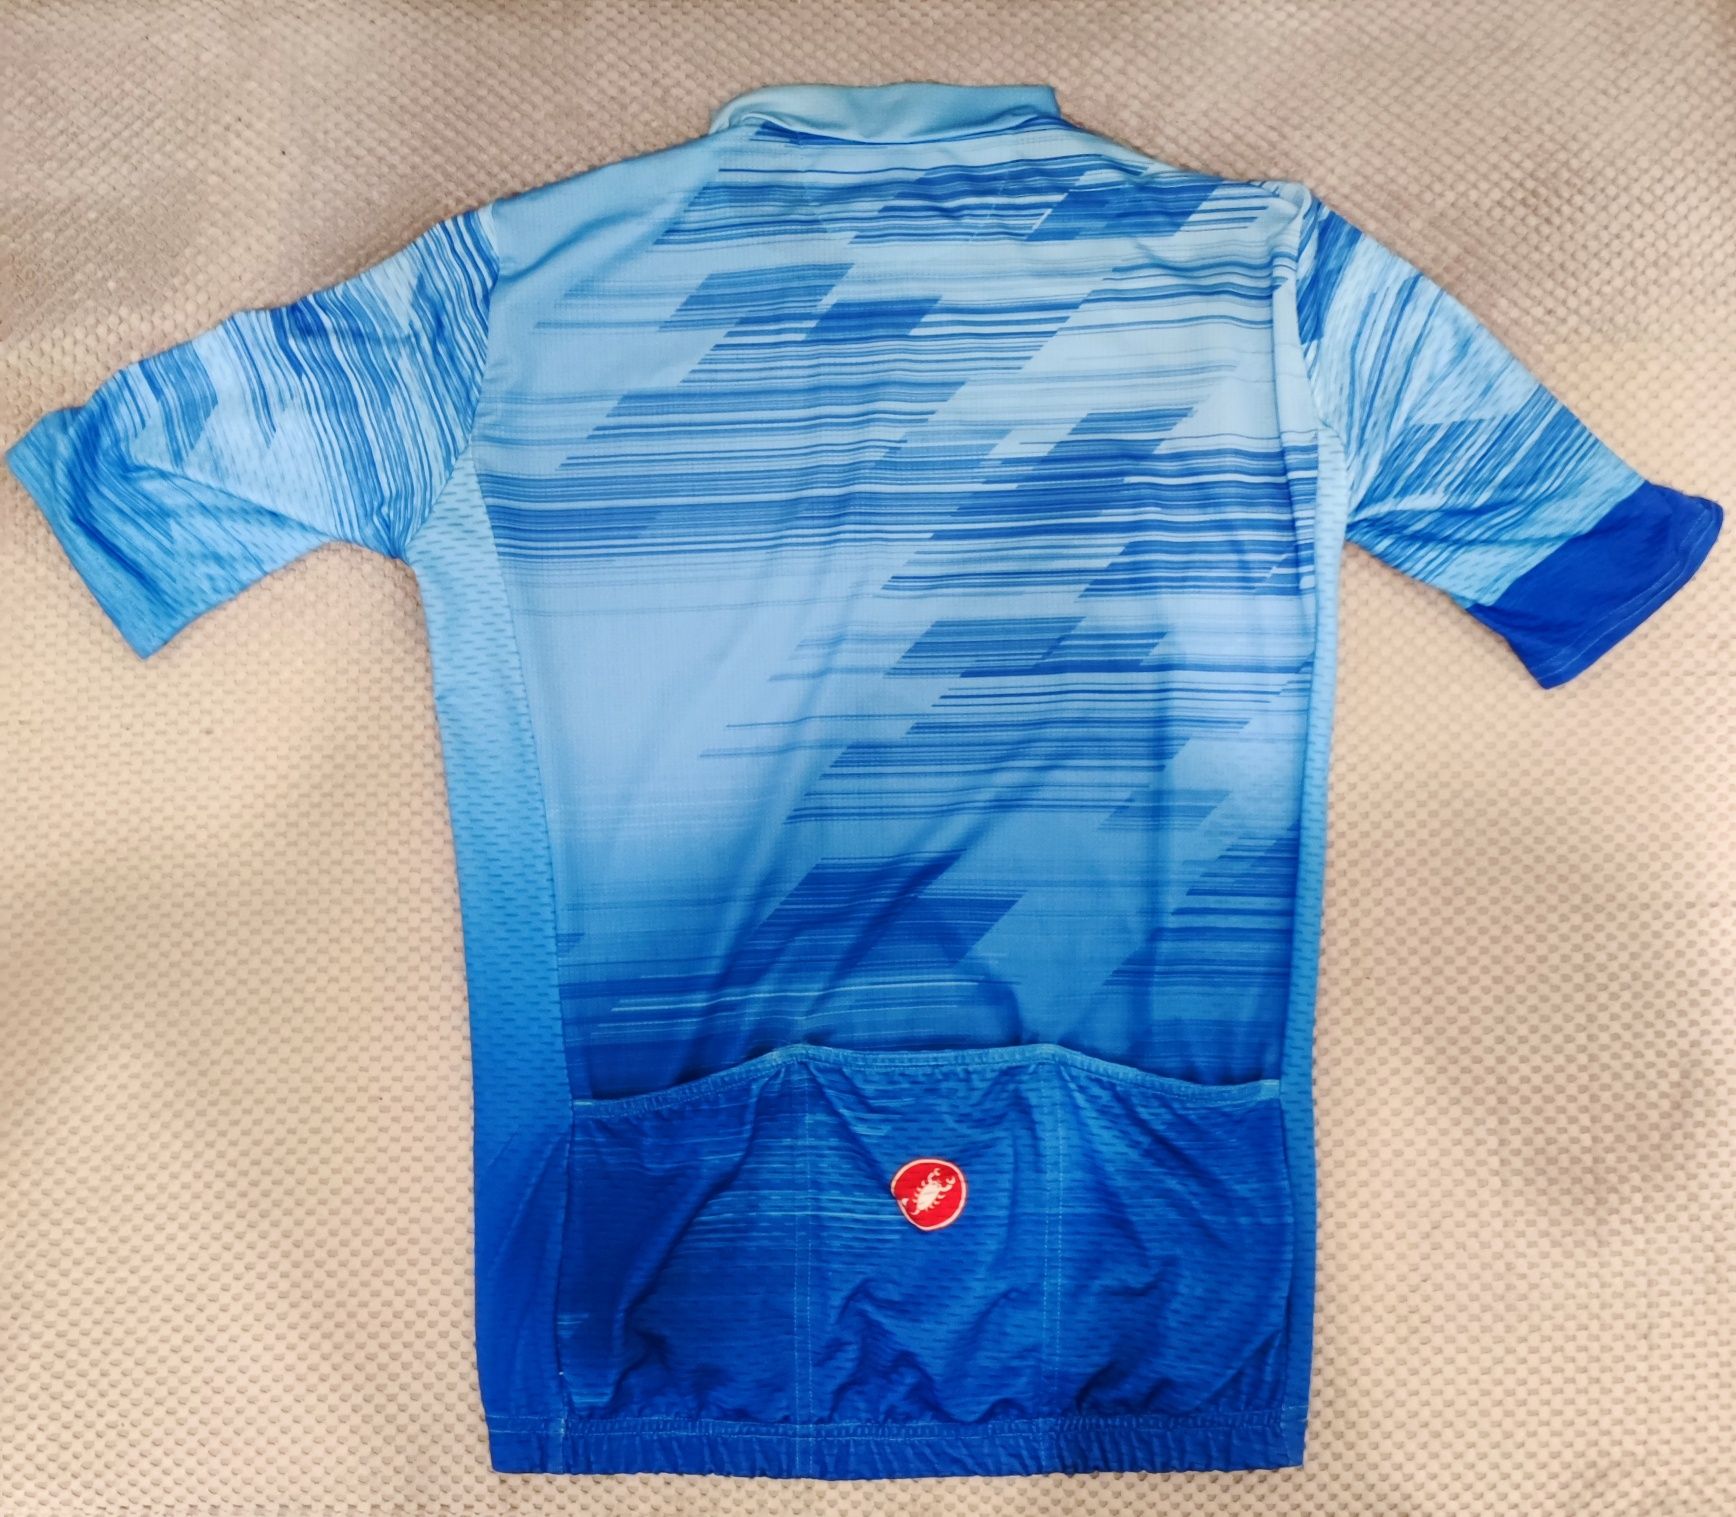 Koszulka rowerowa Castelli Rapido Ocean Blue, Rozmiar S.